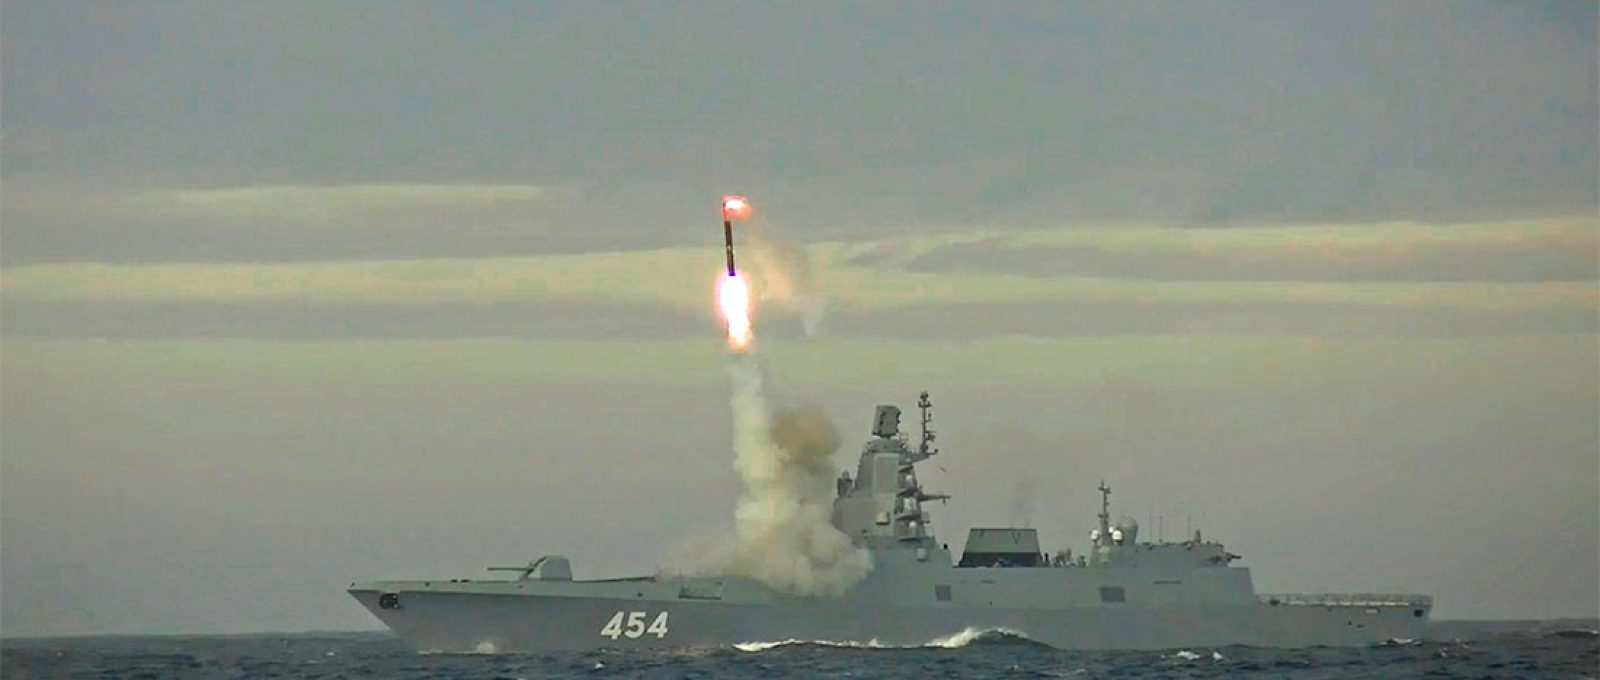 Míssil hipersônico Zircon lançado da fragata Almirante Gorshkov da Marinha russa durante teste no Mar de Barents, snapshot de vídeo de 28 de maio de 2022 (Ministério da Defesa da Rússia/Reuters).